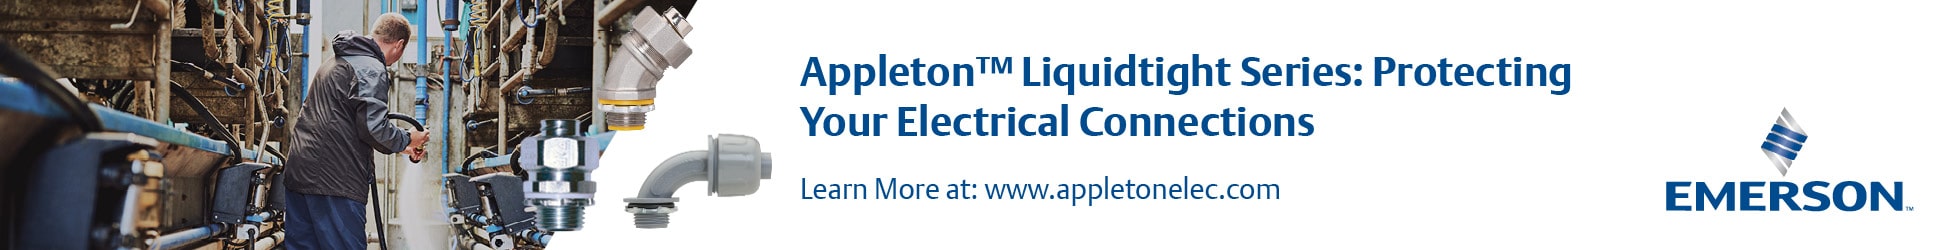 Appleton Liquidtight Series Connectors